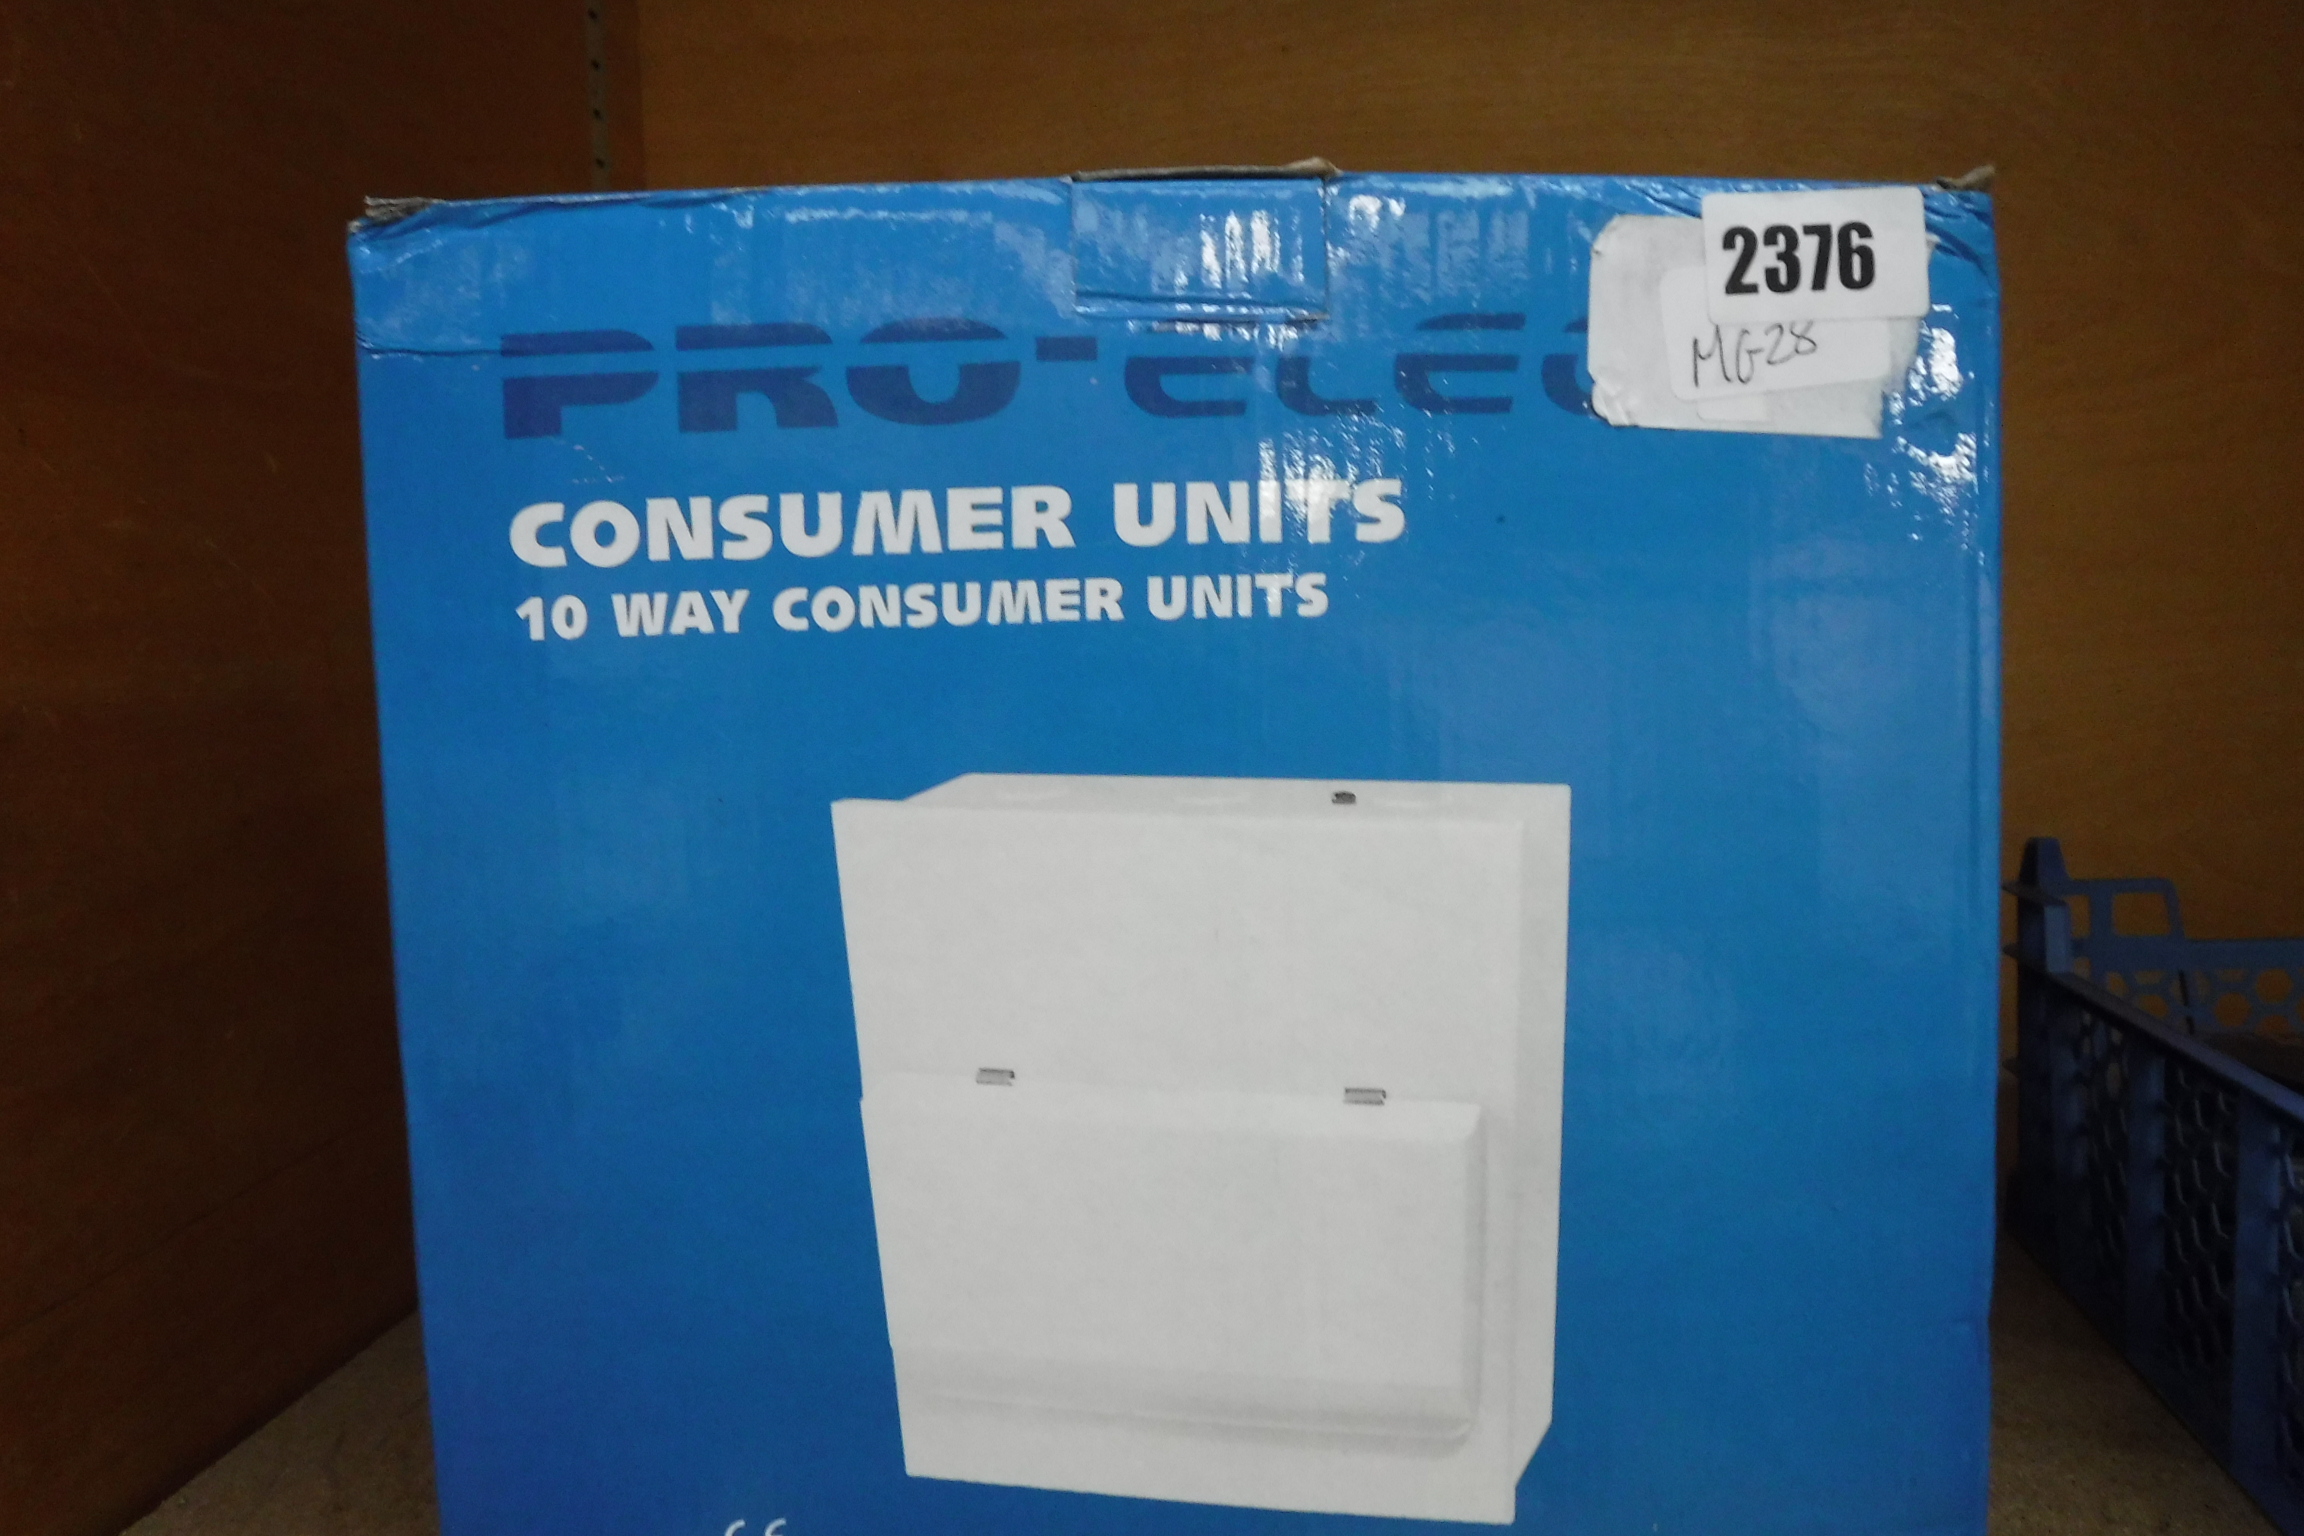 Pro Elec consumer unit